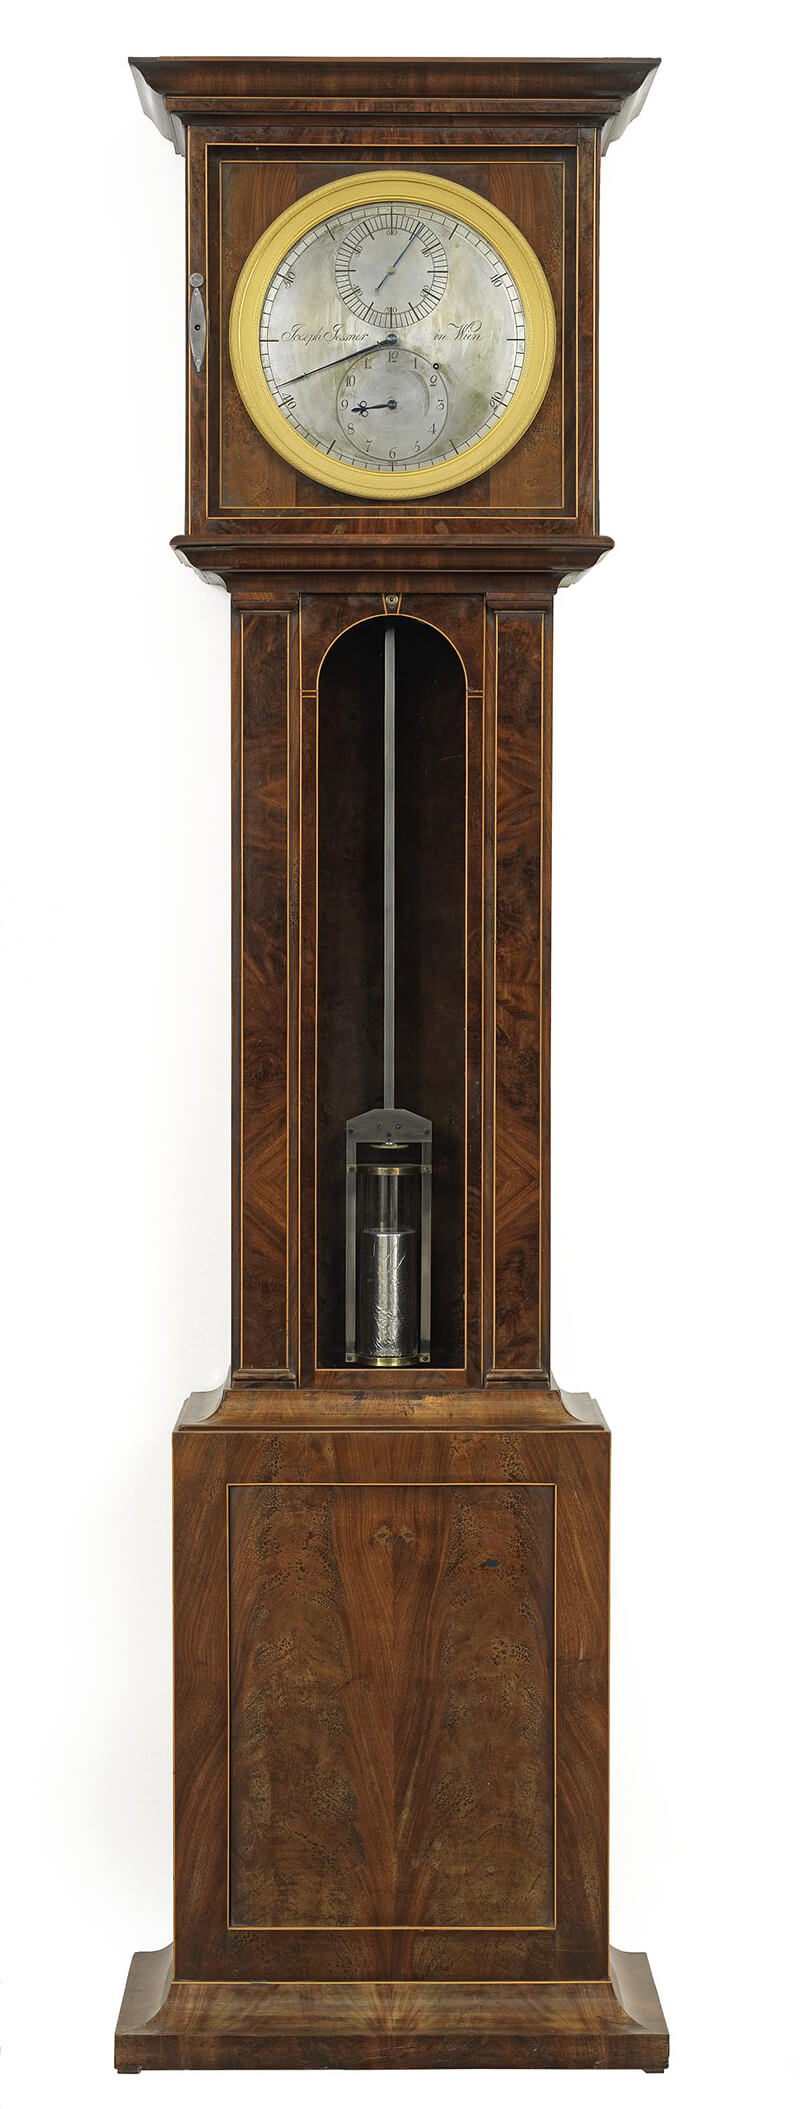 Astronomischer Regulator (Uhrmacher: Joseph Jessner), um 1820, Wien Museum 